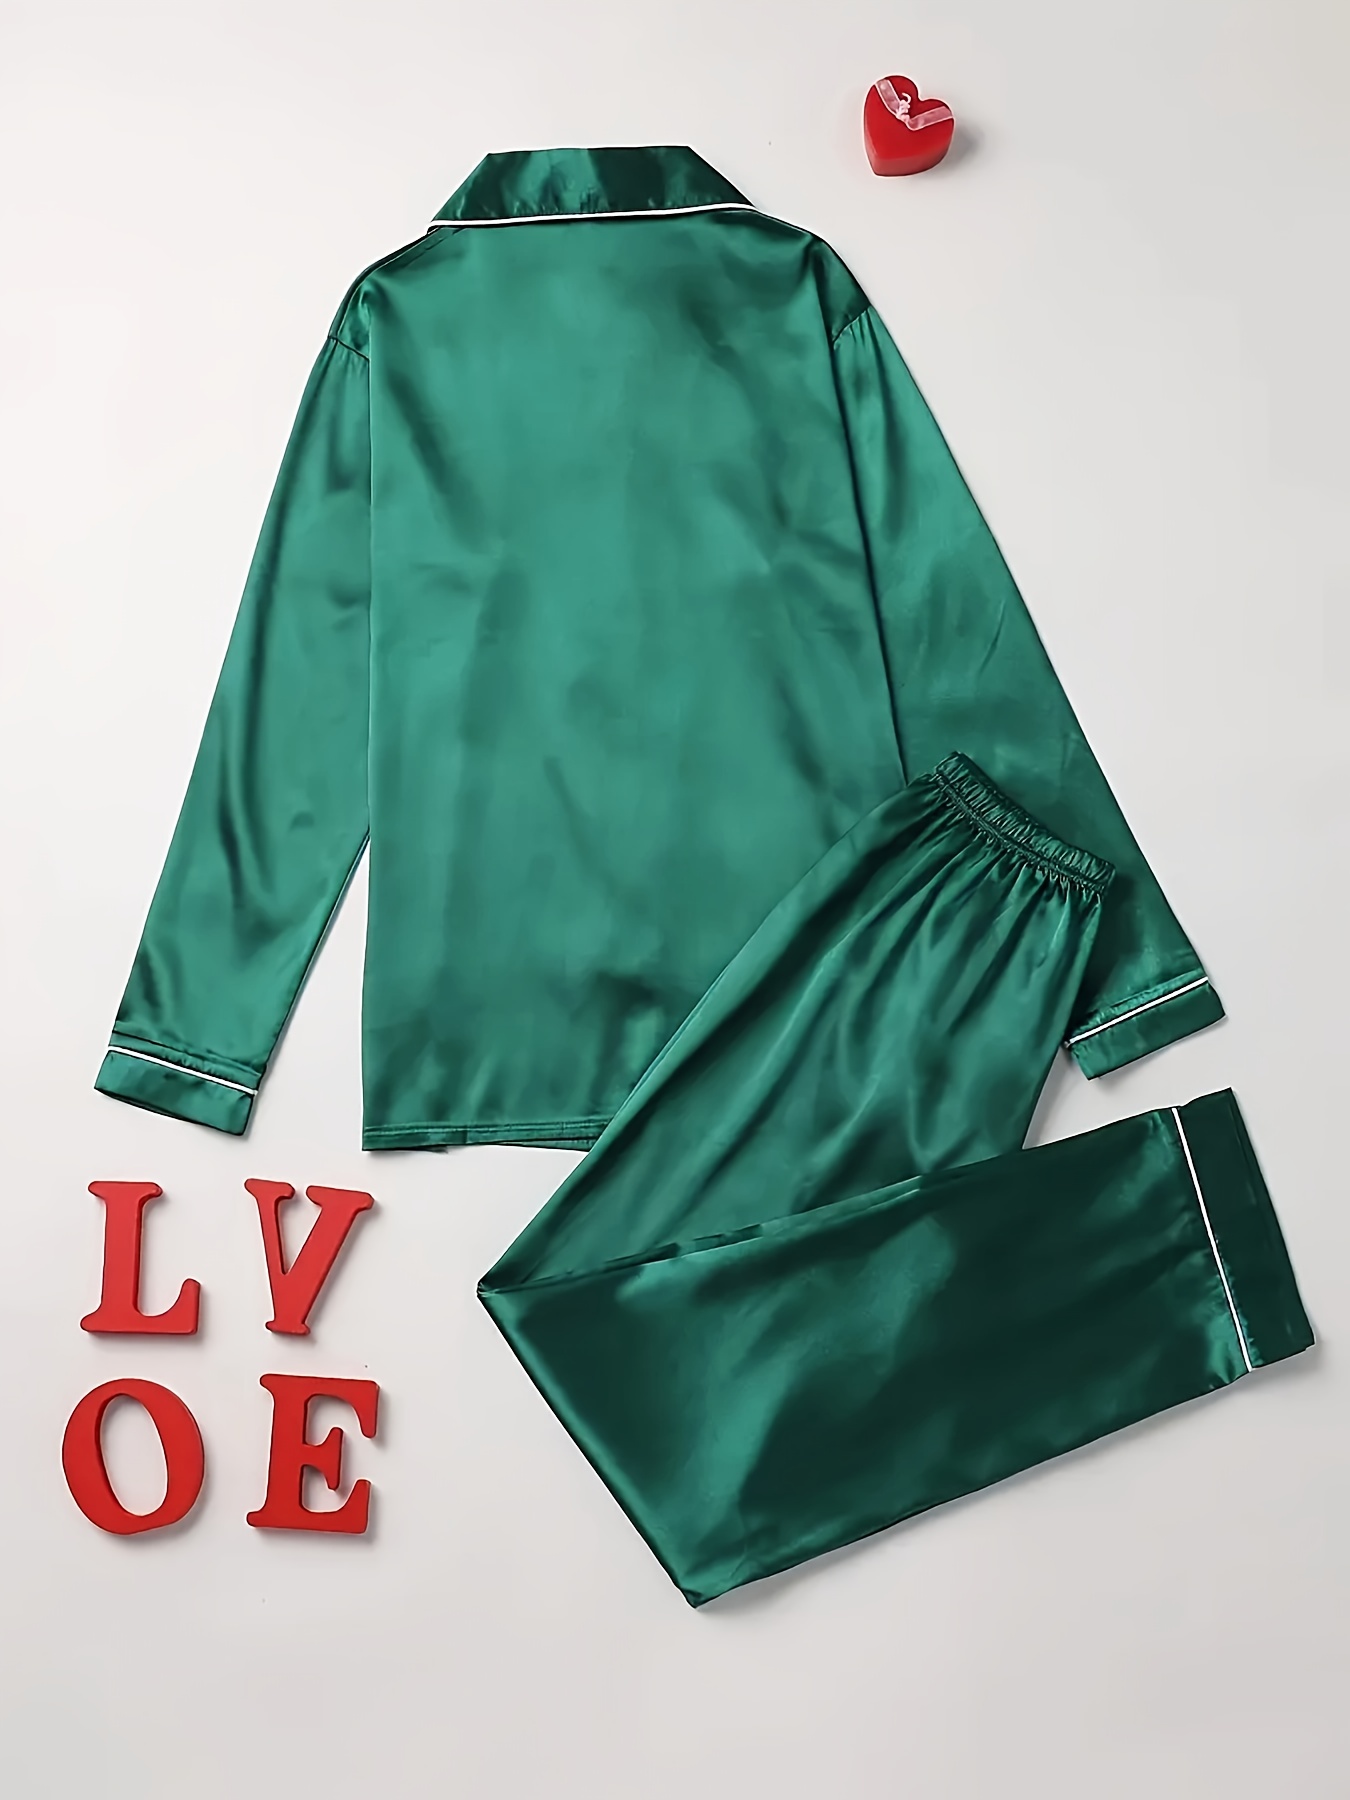 Elegant Pajama Set - Womens - Rich Green Color - 6 Size Options - ApolloBox